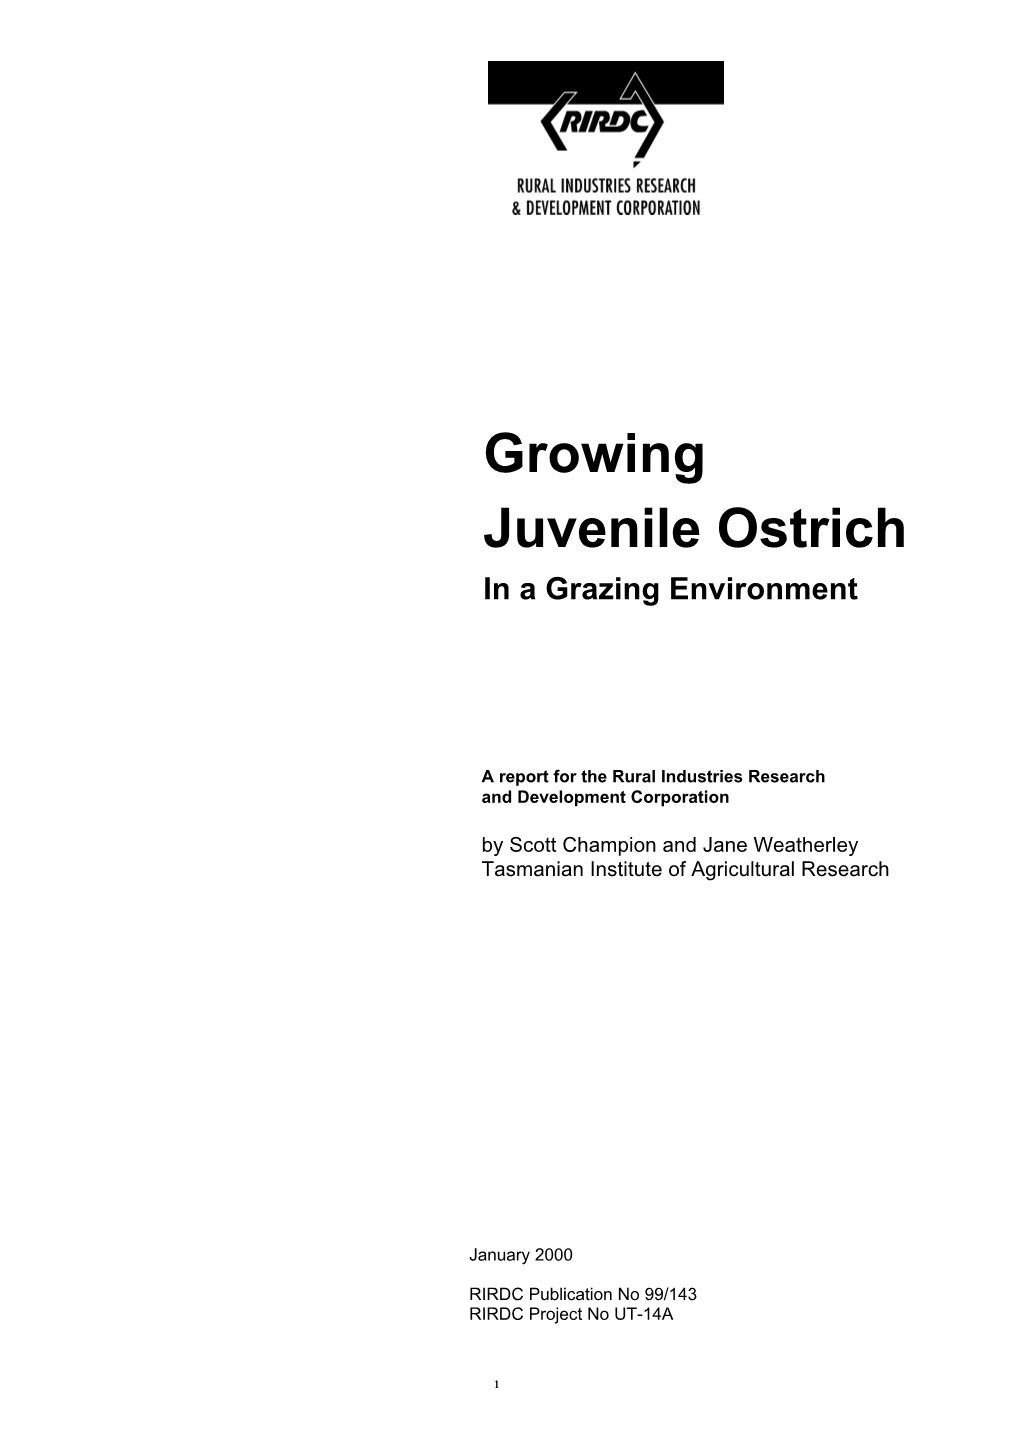 Growing Juvenile Ostrich